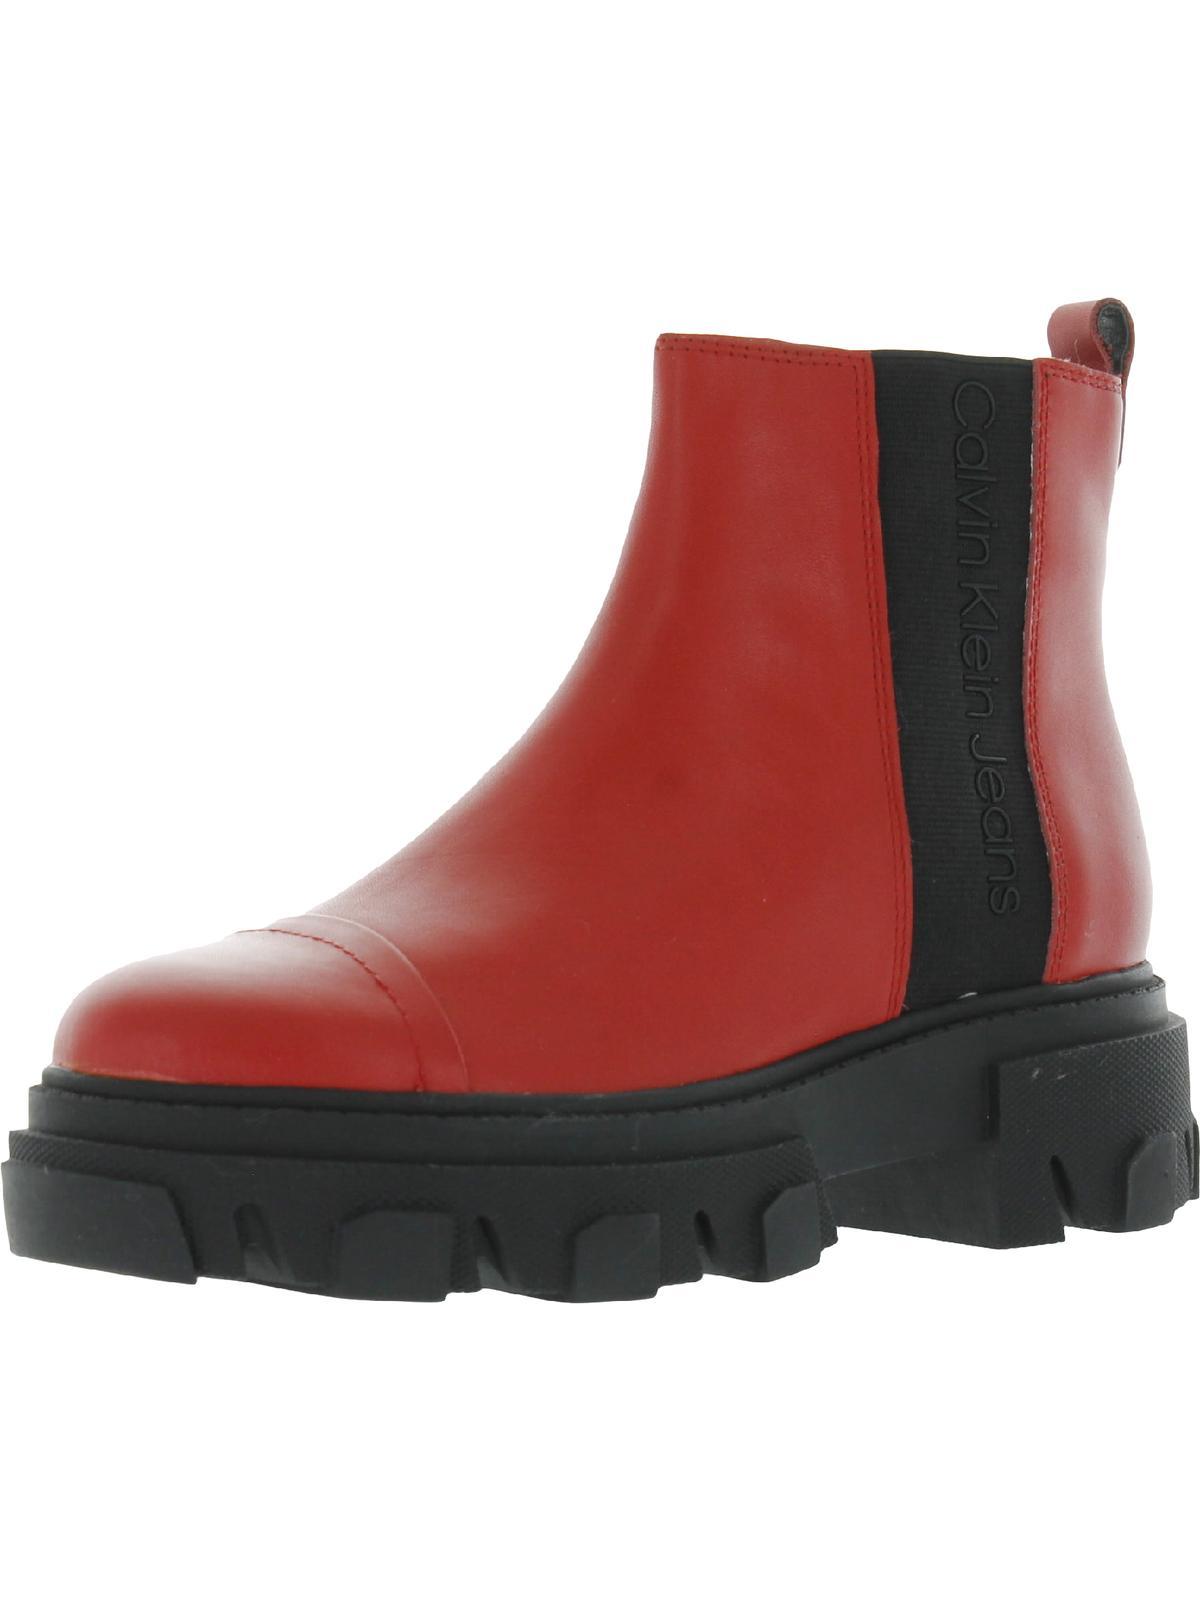 Calvin Klein Lorine Slip On Heel Ankle Boots in Red | Lyst